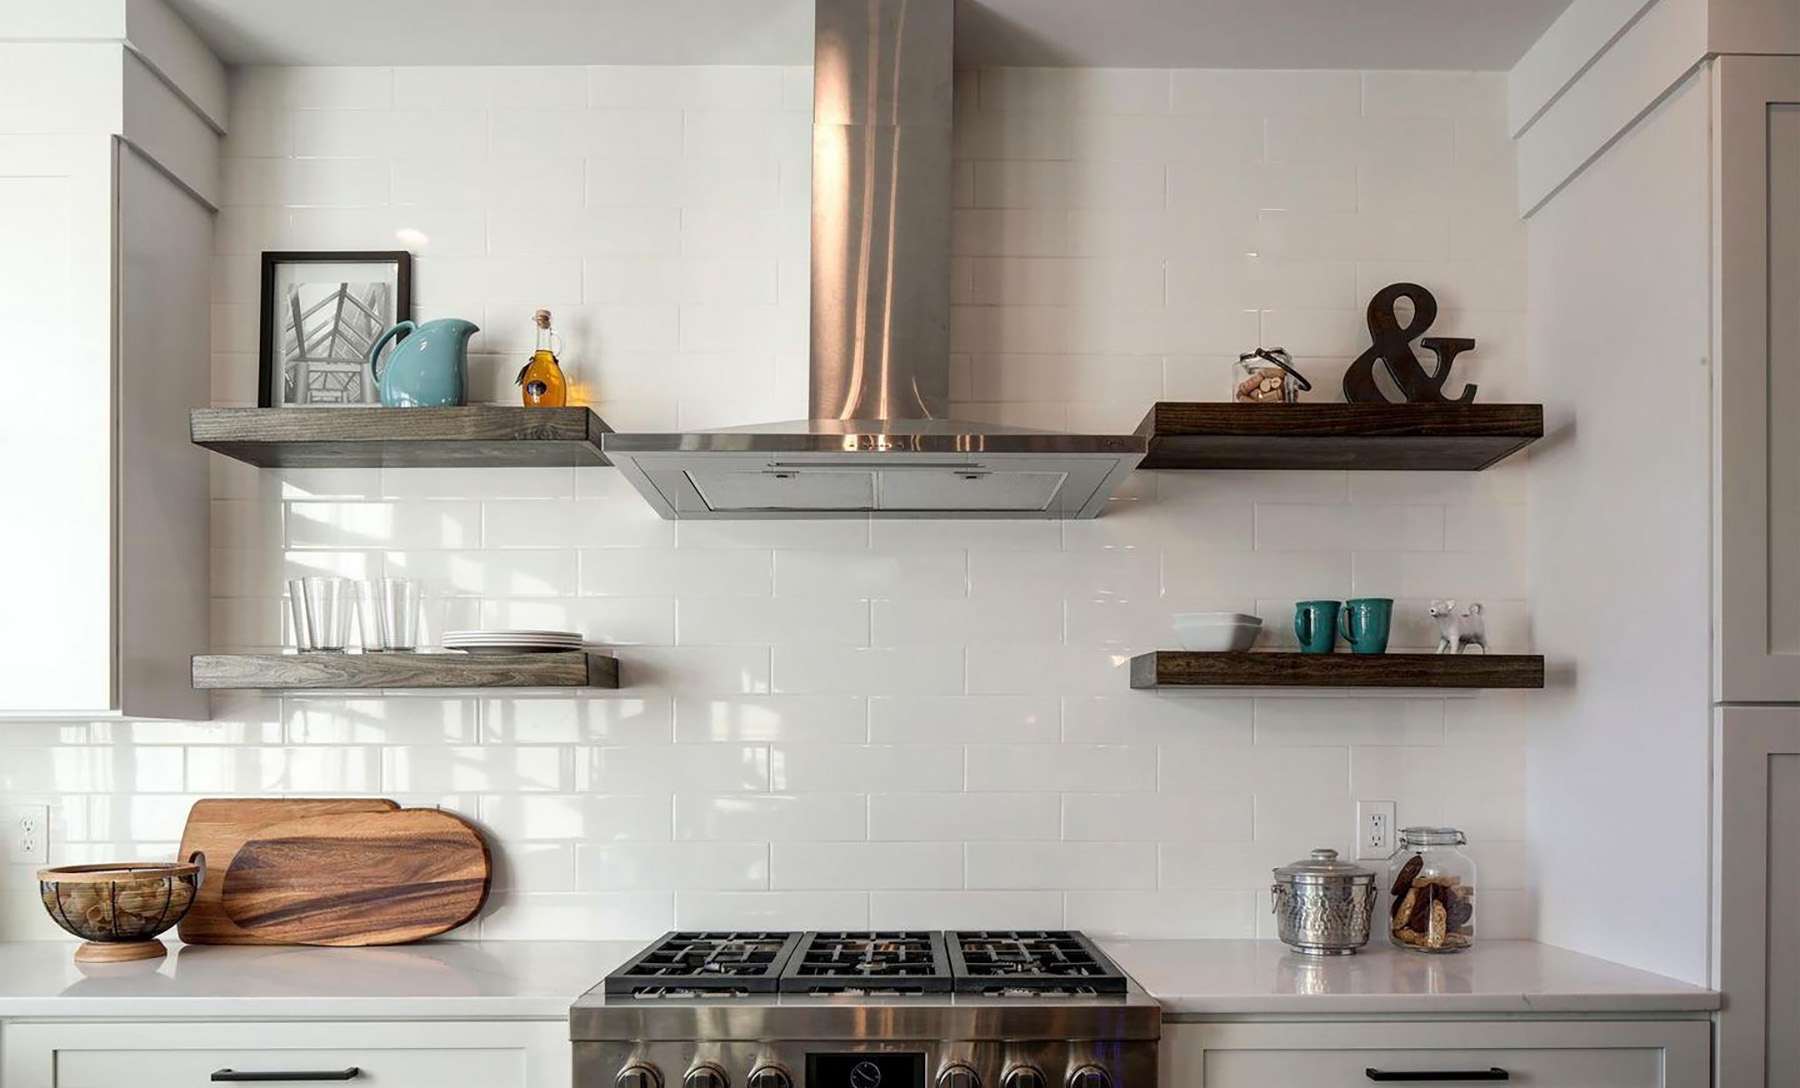 Painted white kitchen cabinets with subway tile backsplash and floating wood shelves.